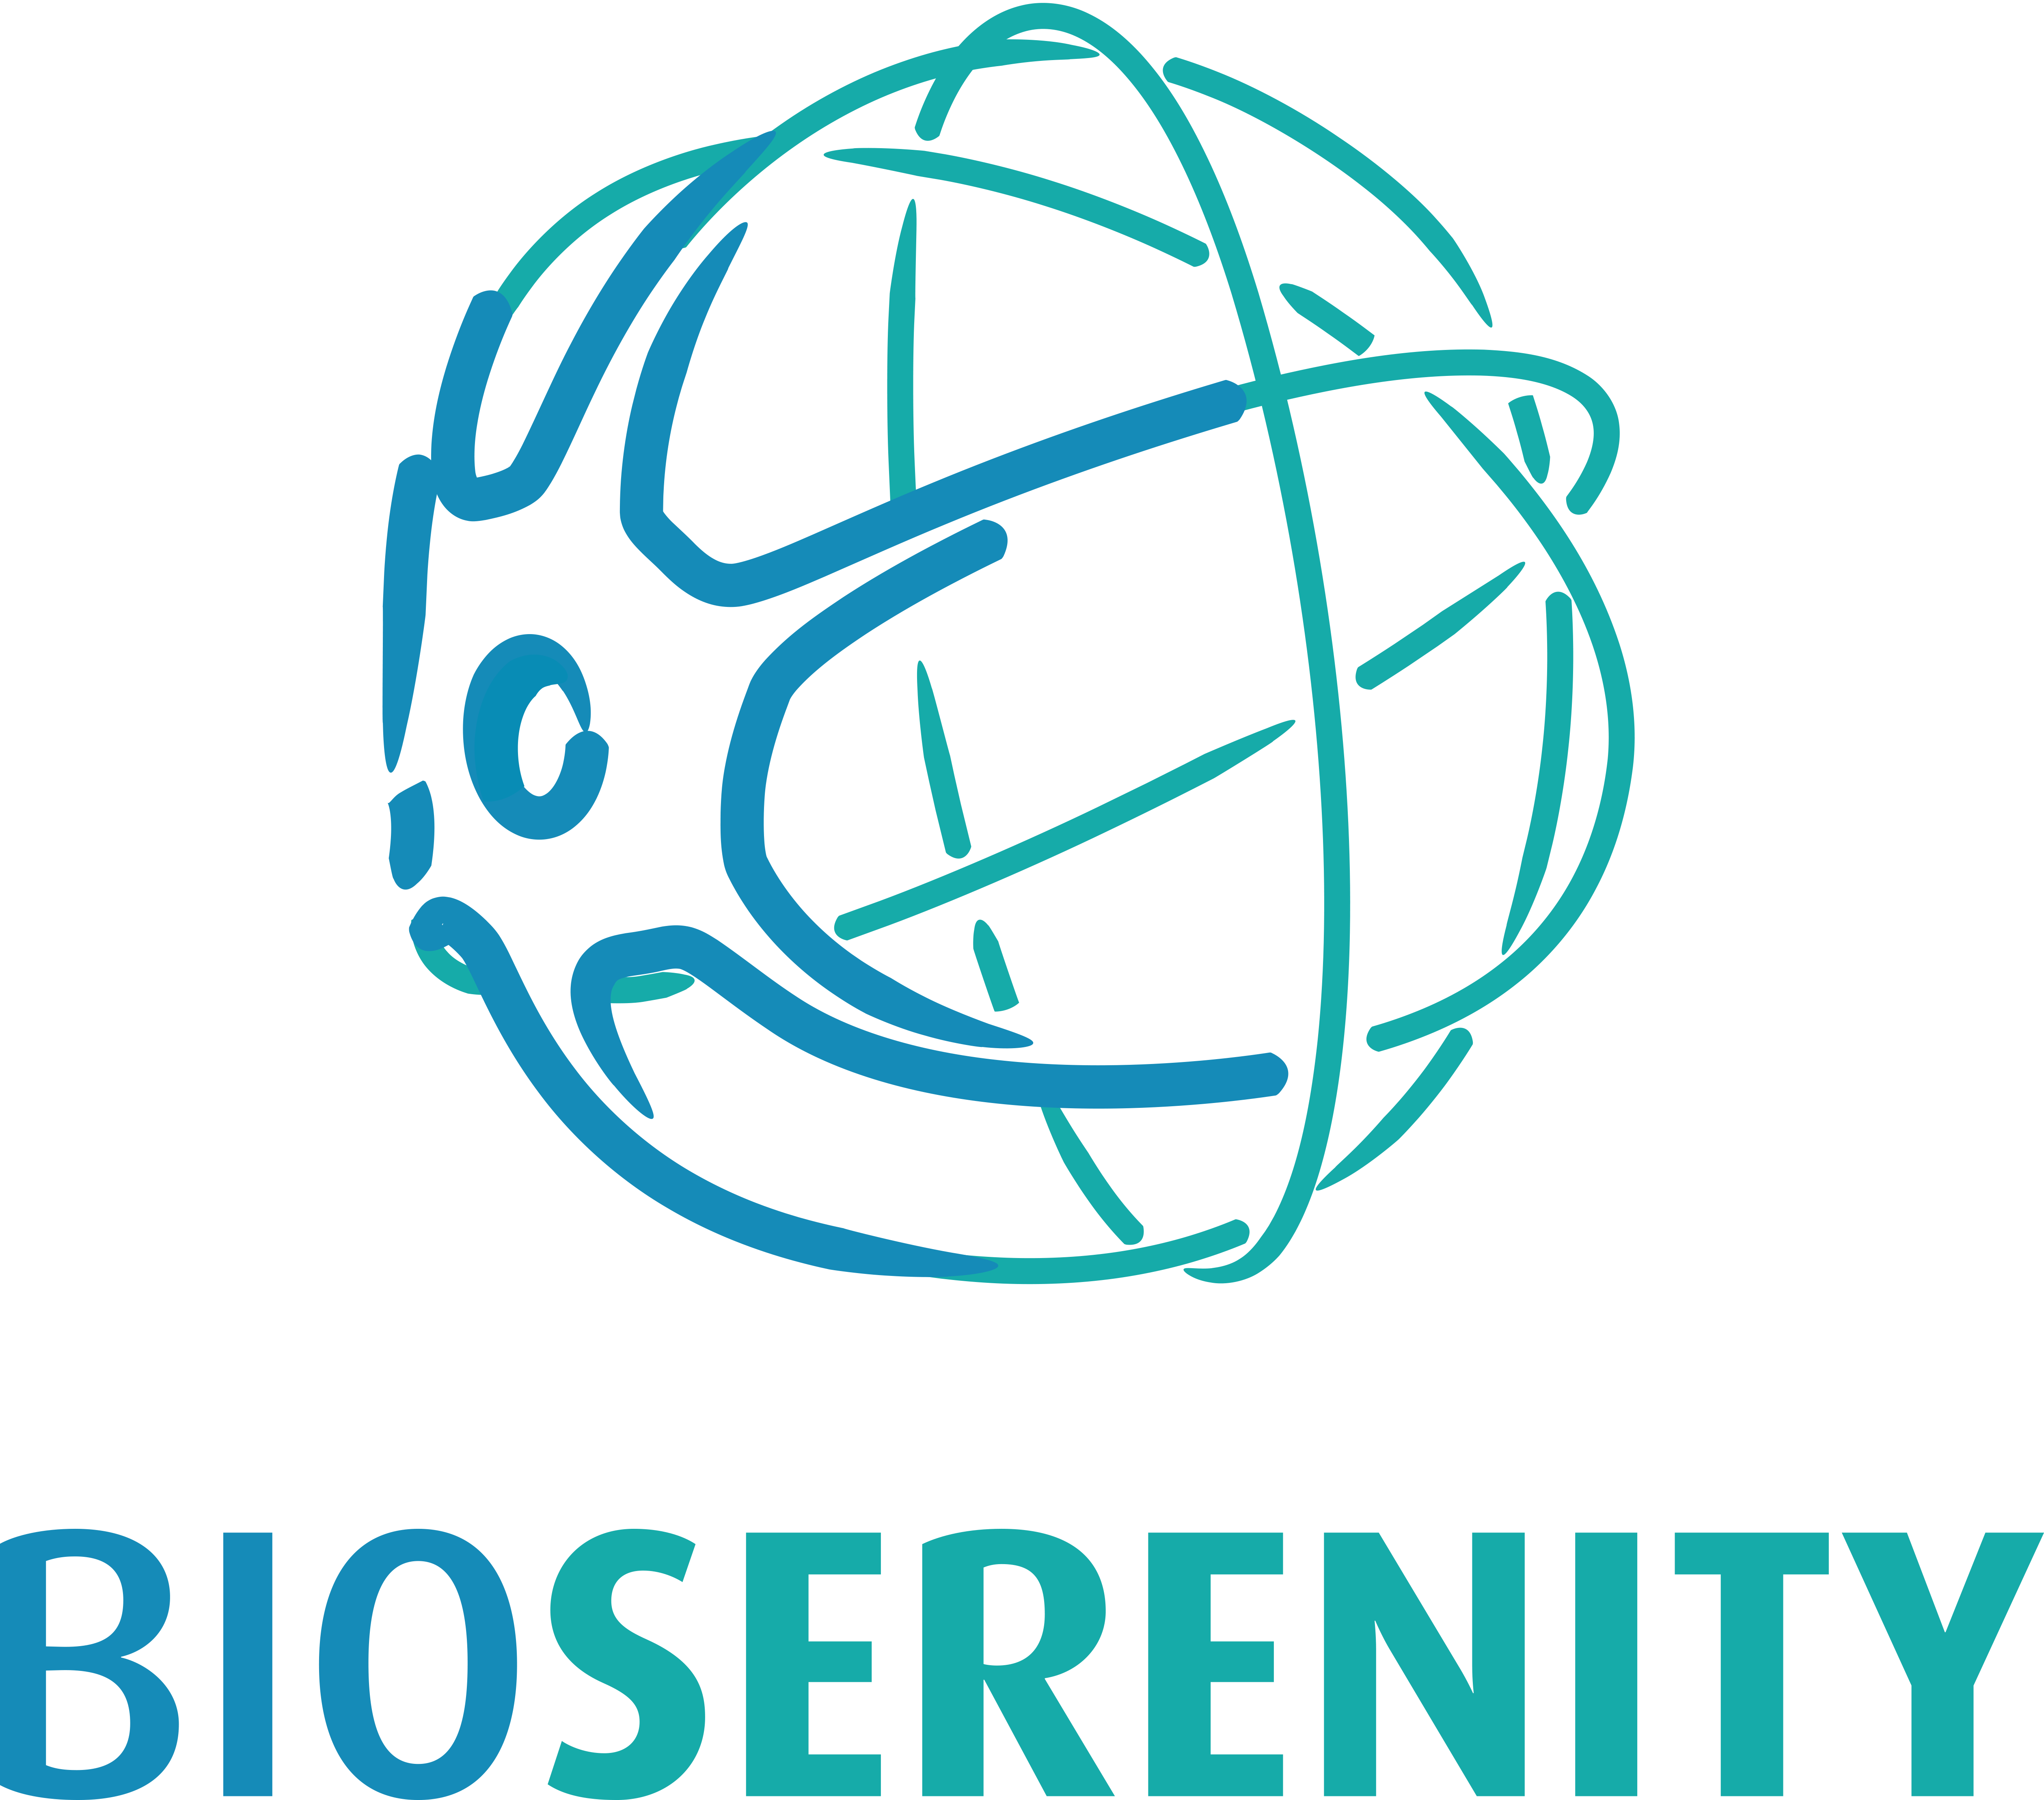 Bioserenity